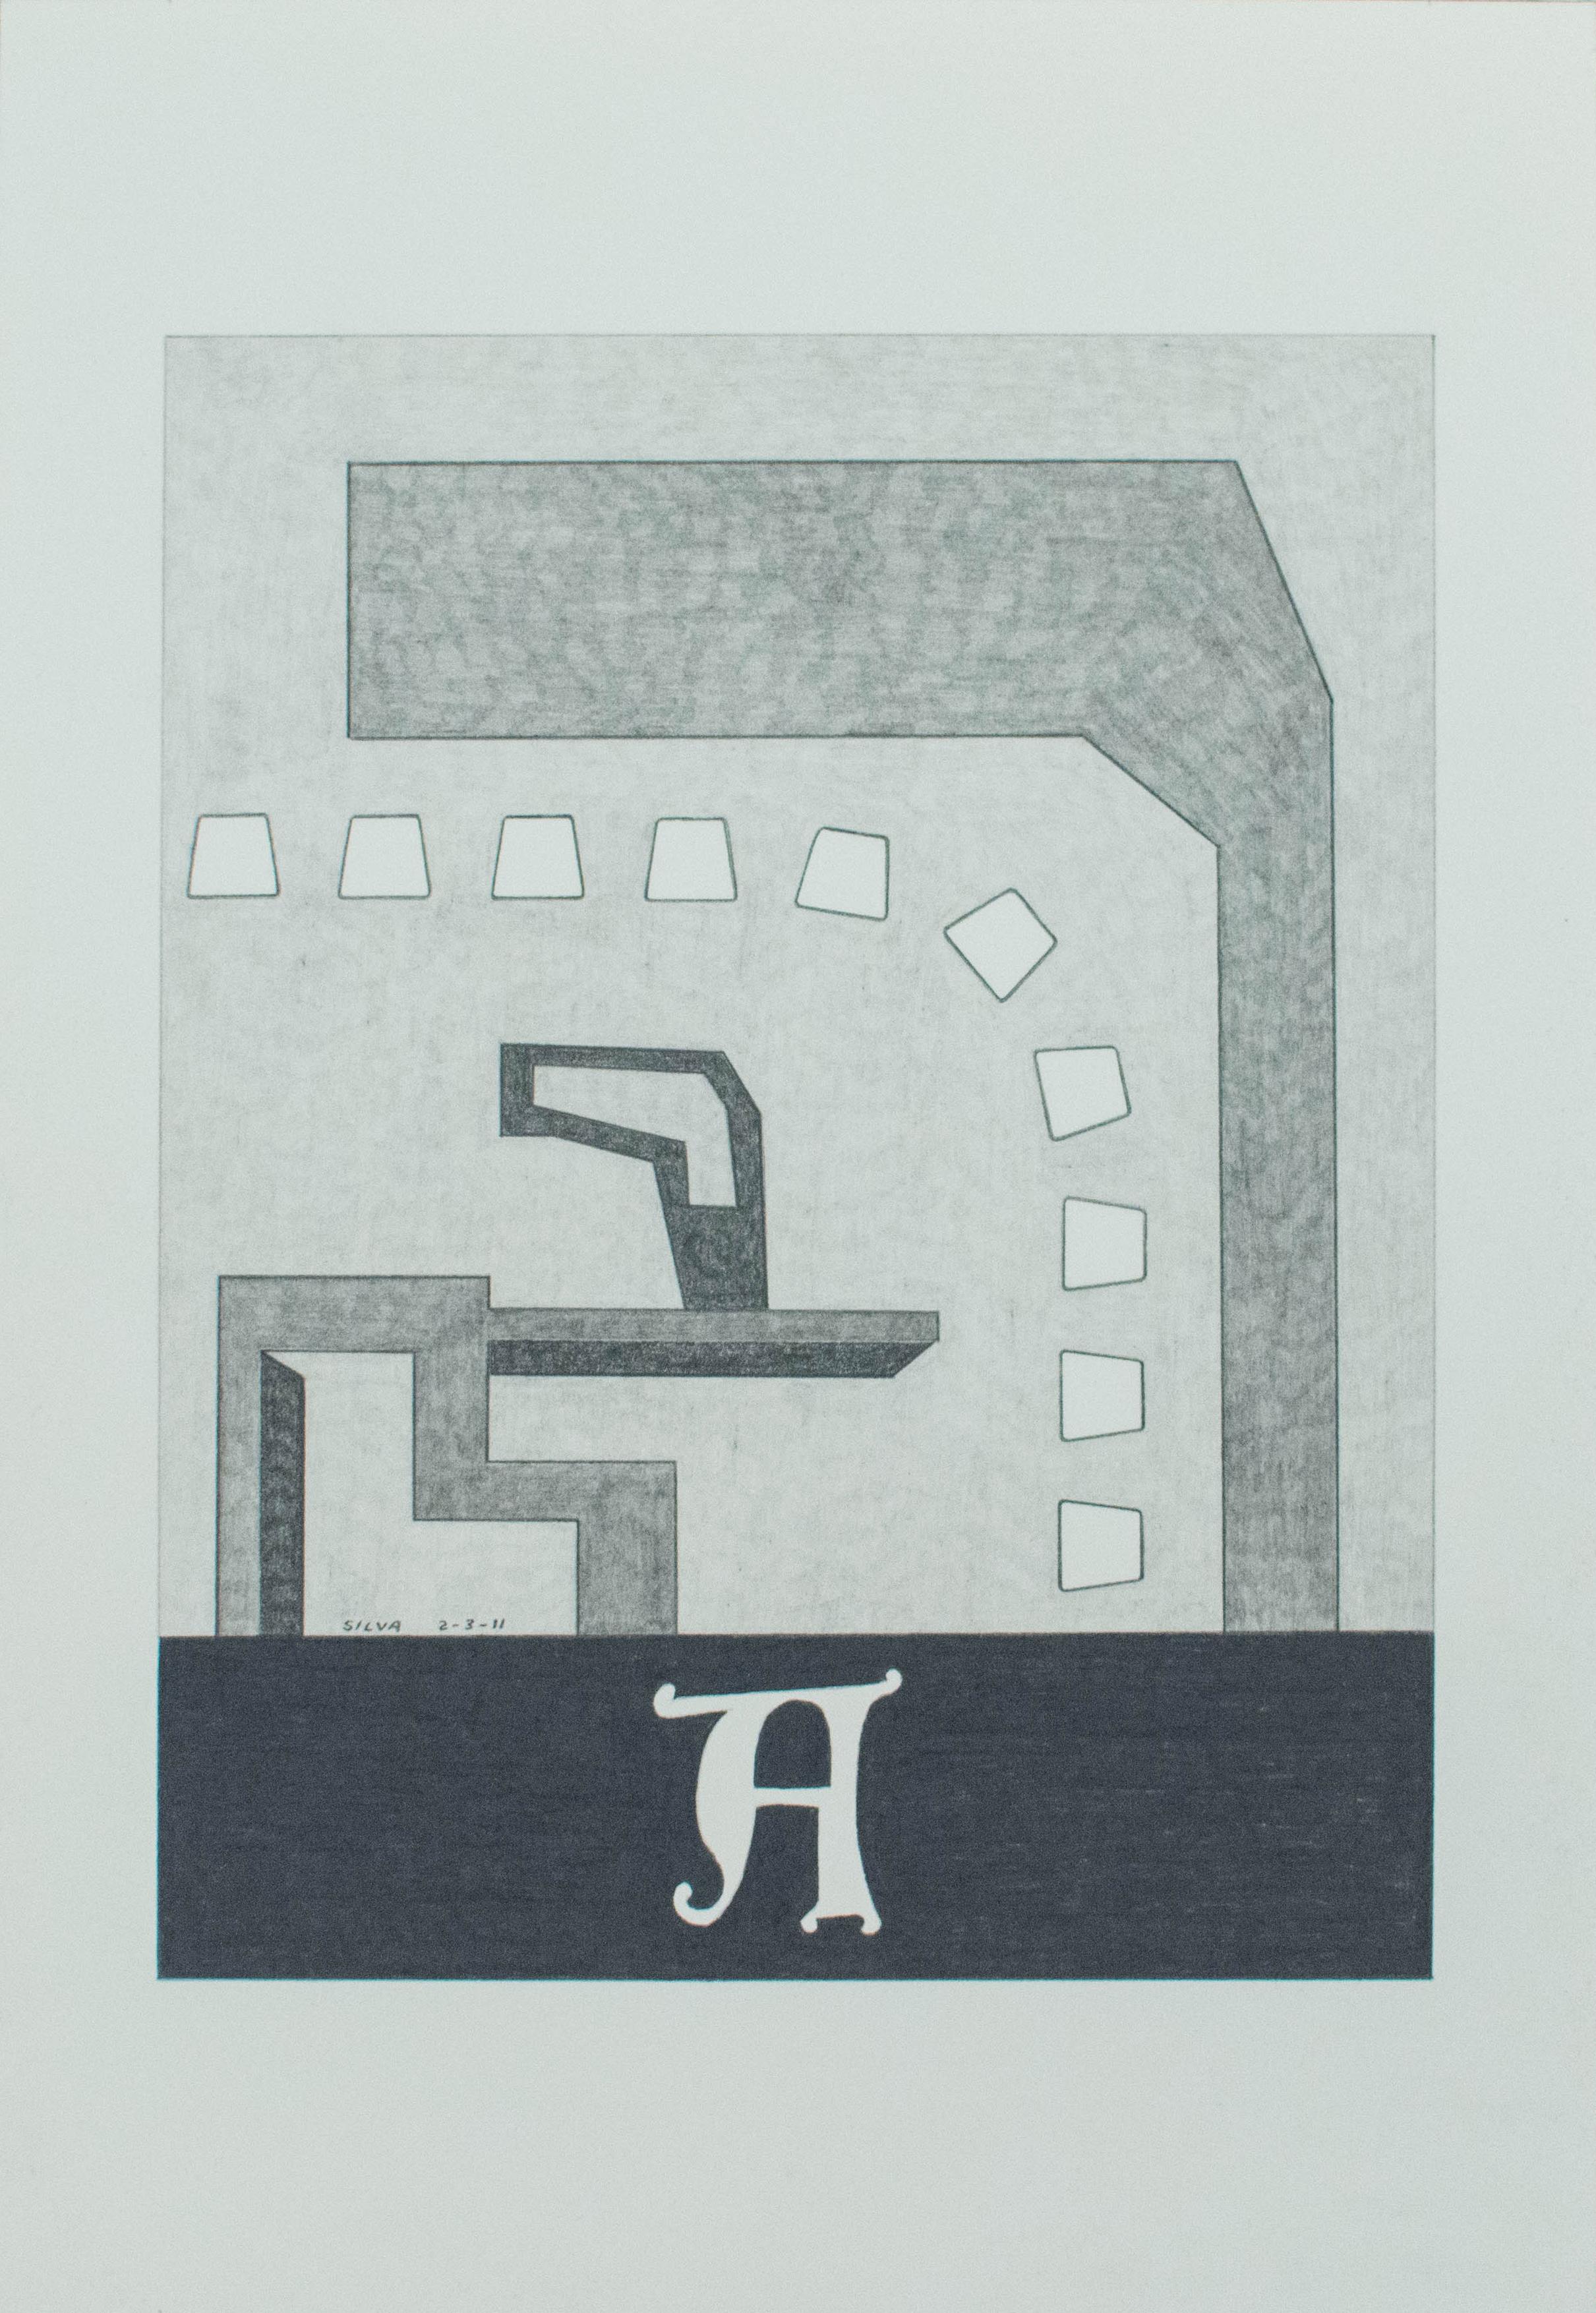 2-3-11, 2011, Graphite on paper, 7 x 10 inches